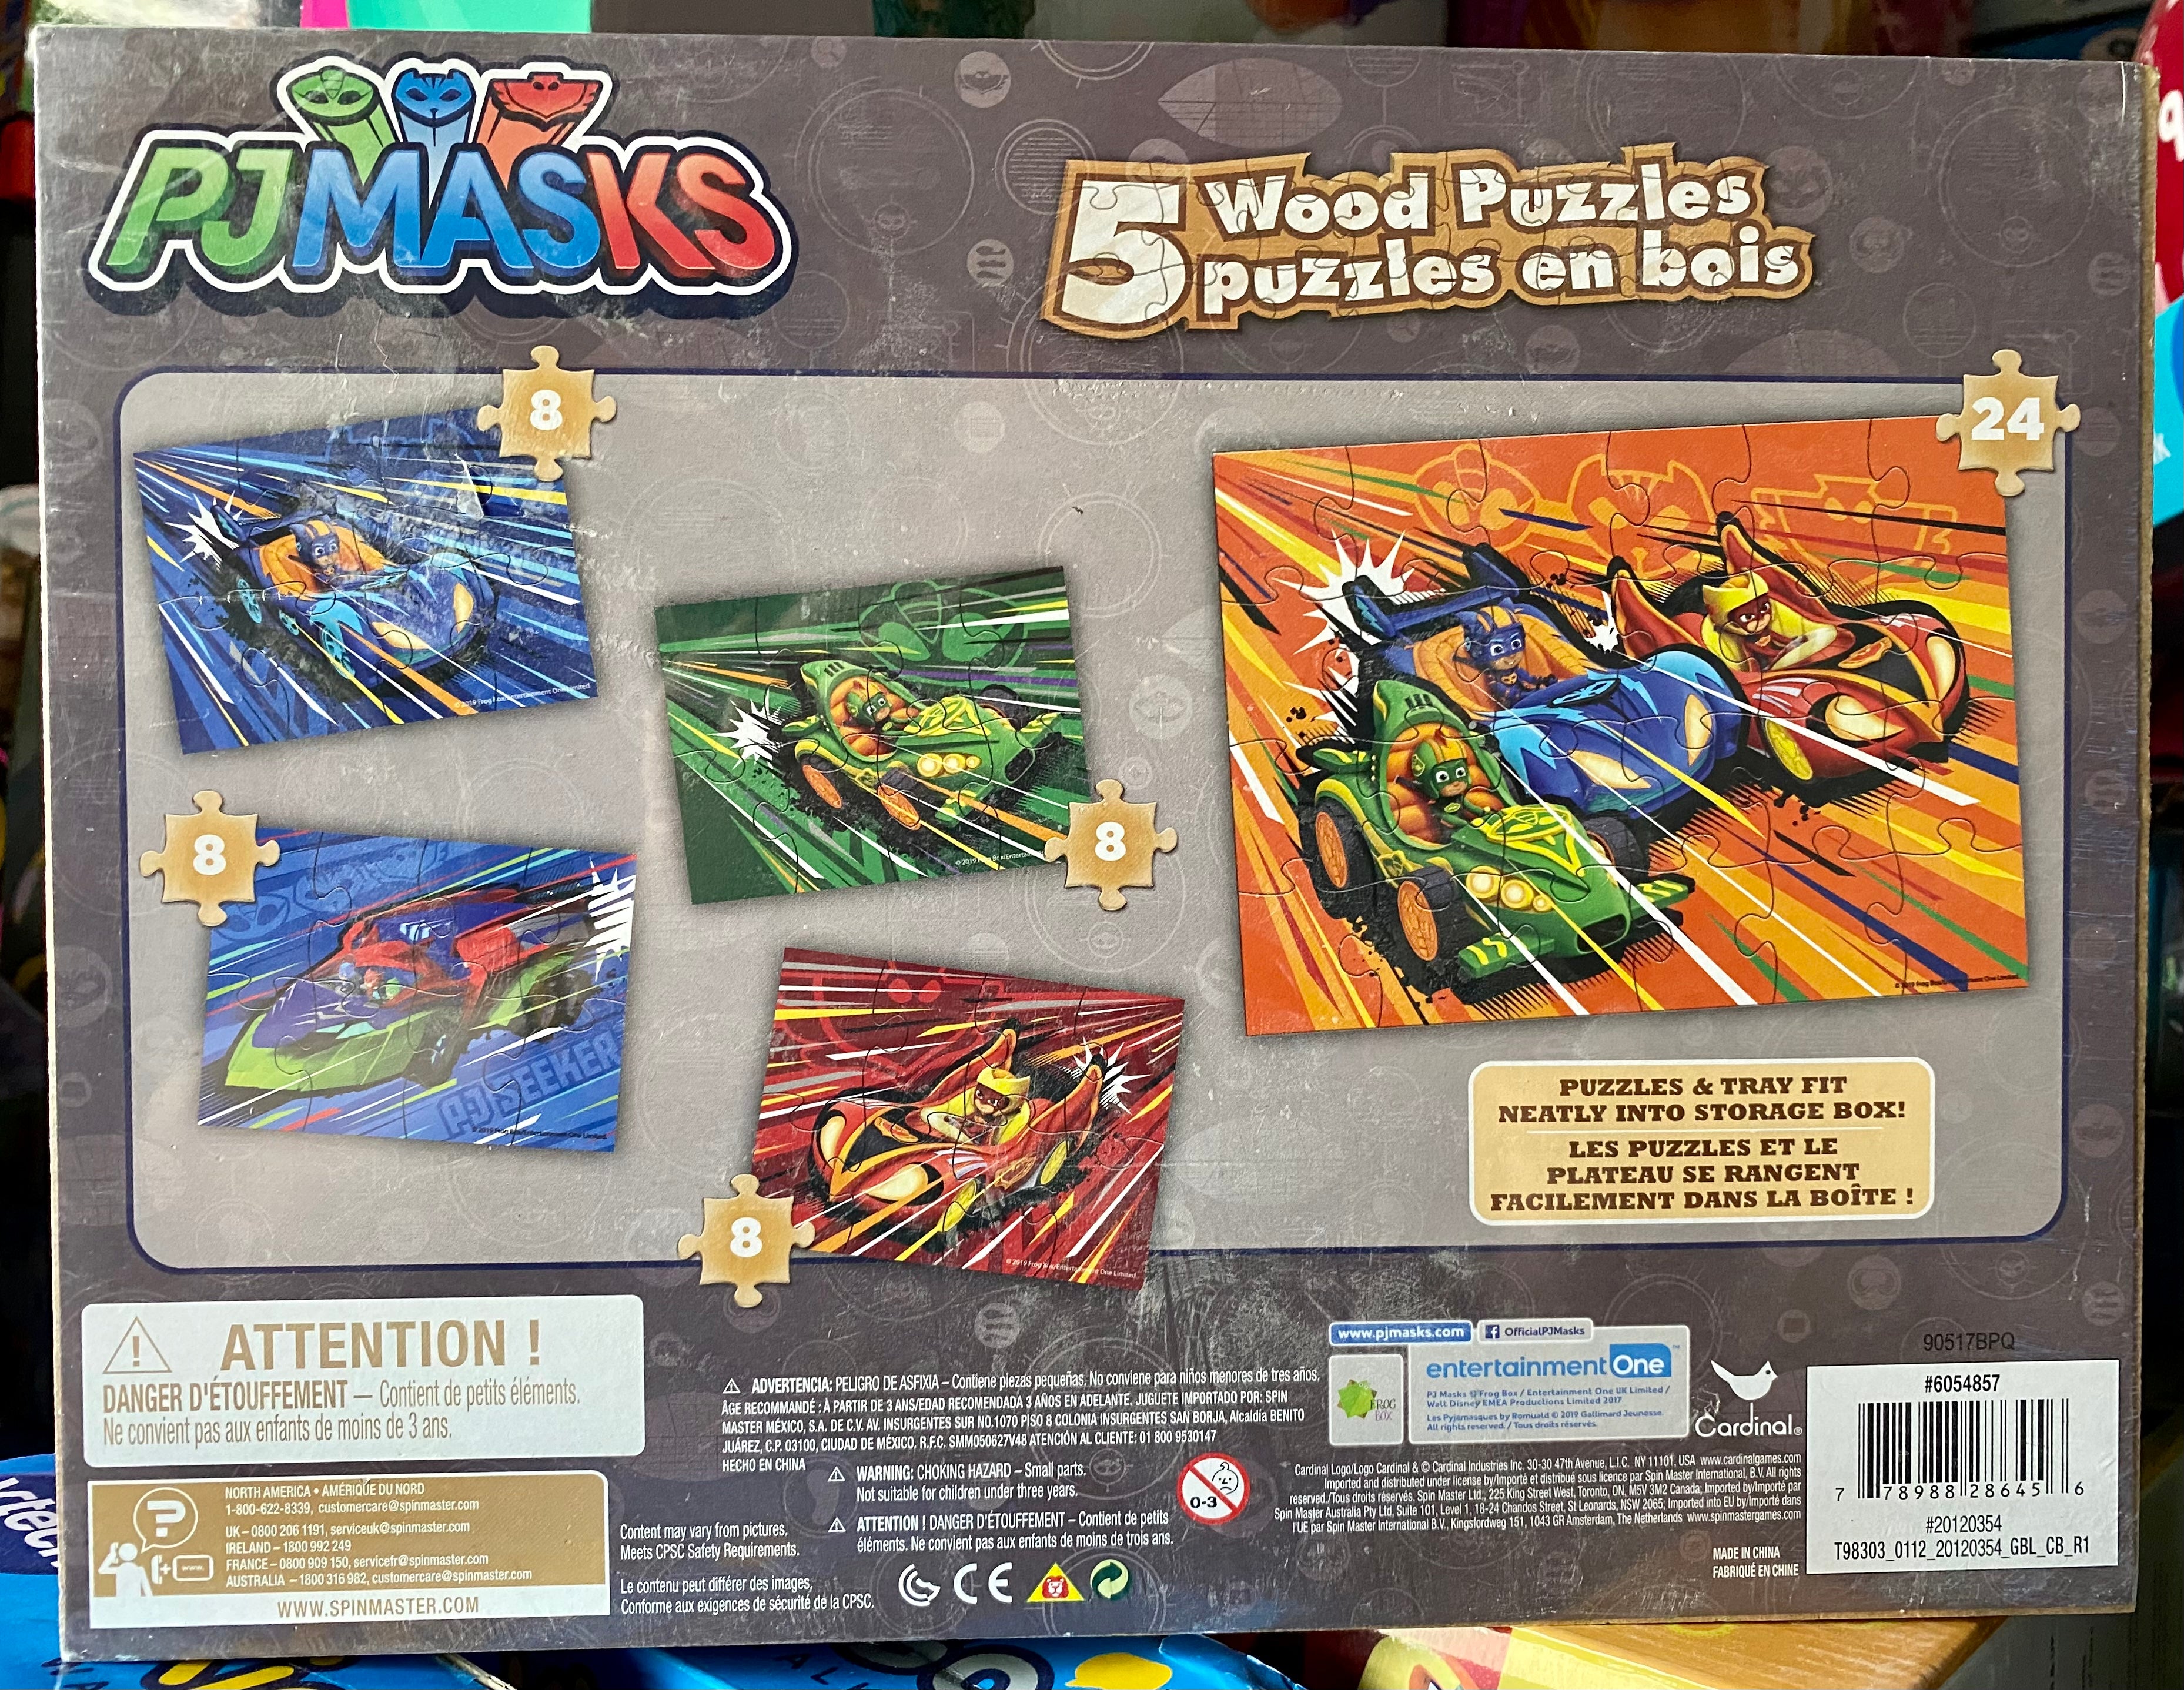 Marvel Super Hero Adventures 5 Wood Puzzles Set in Wooden Storage Box